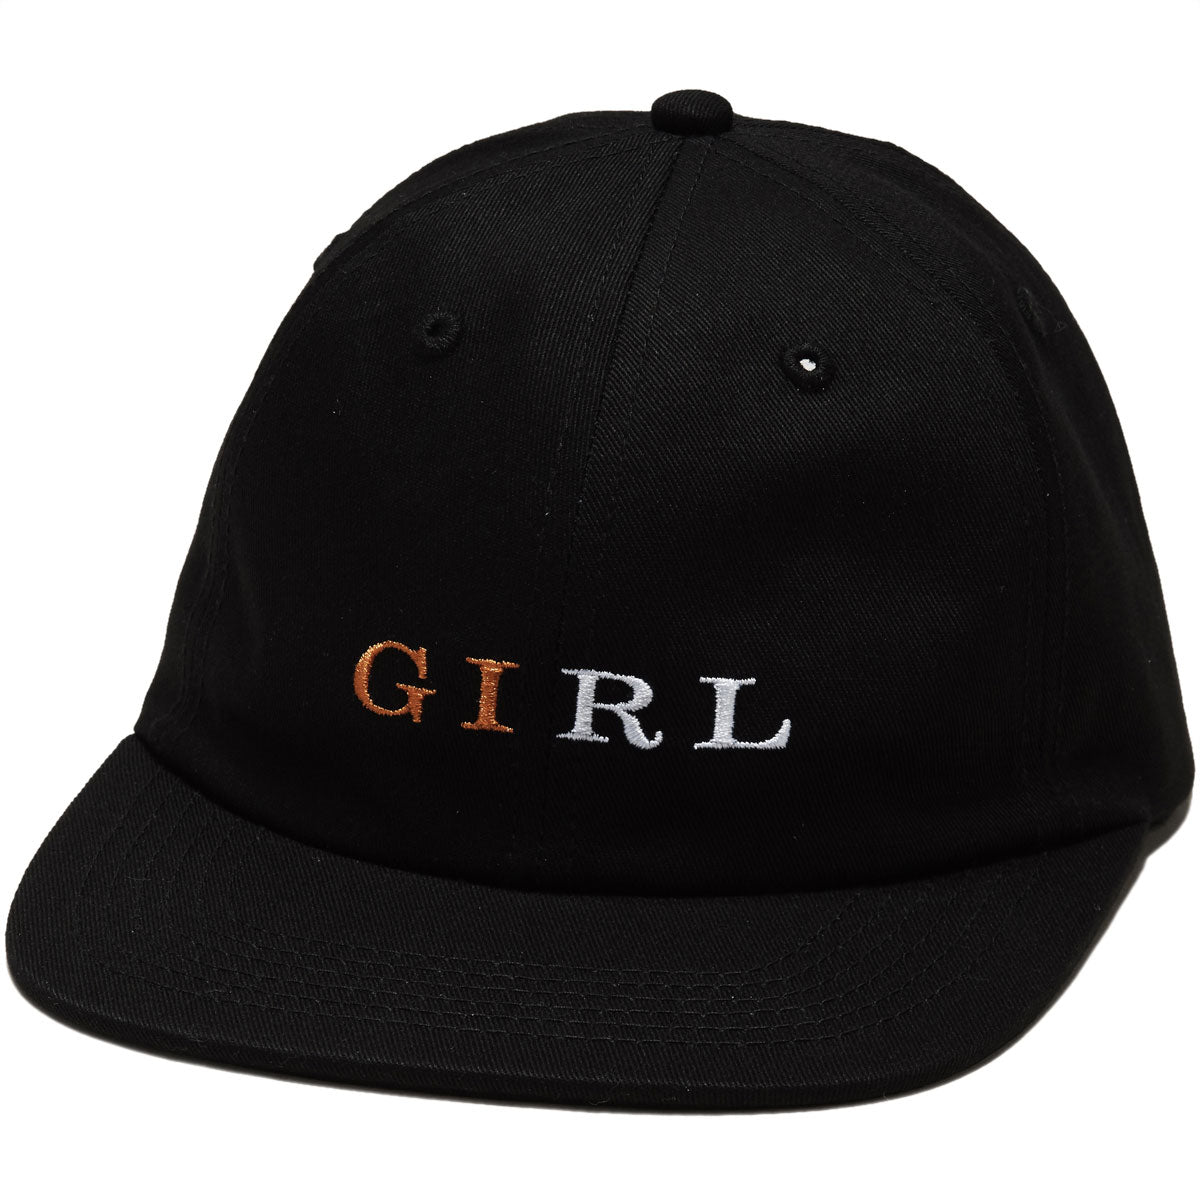 Girl Serif Snapback Hat - Black image 1